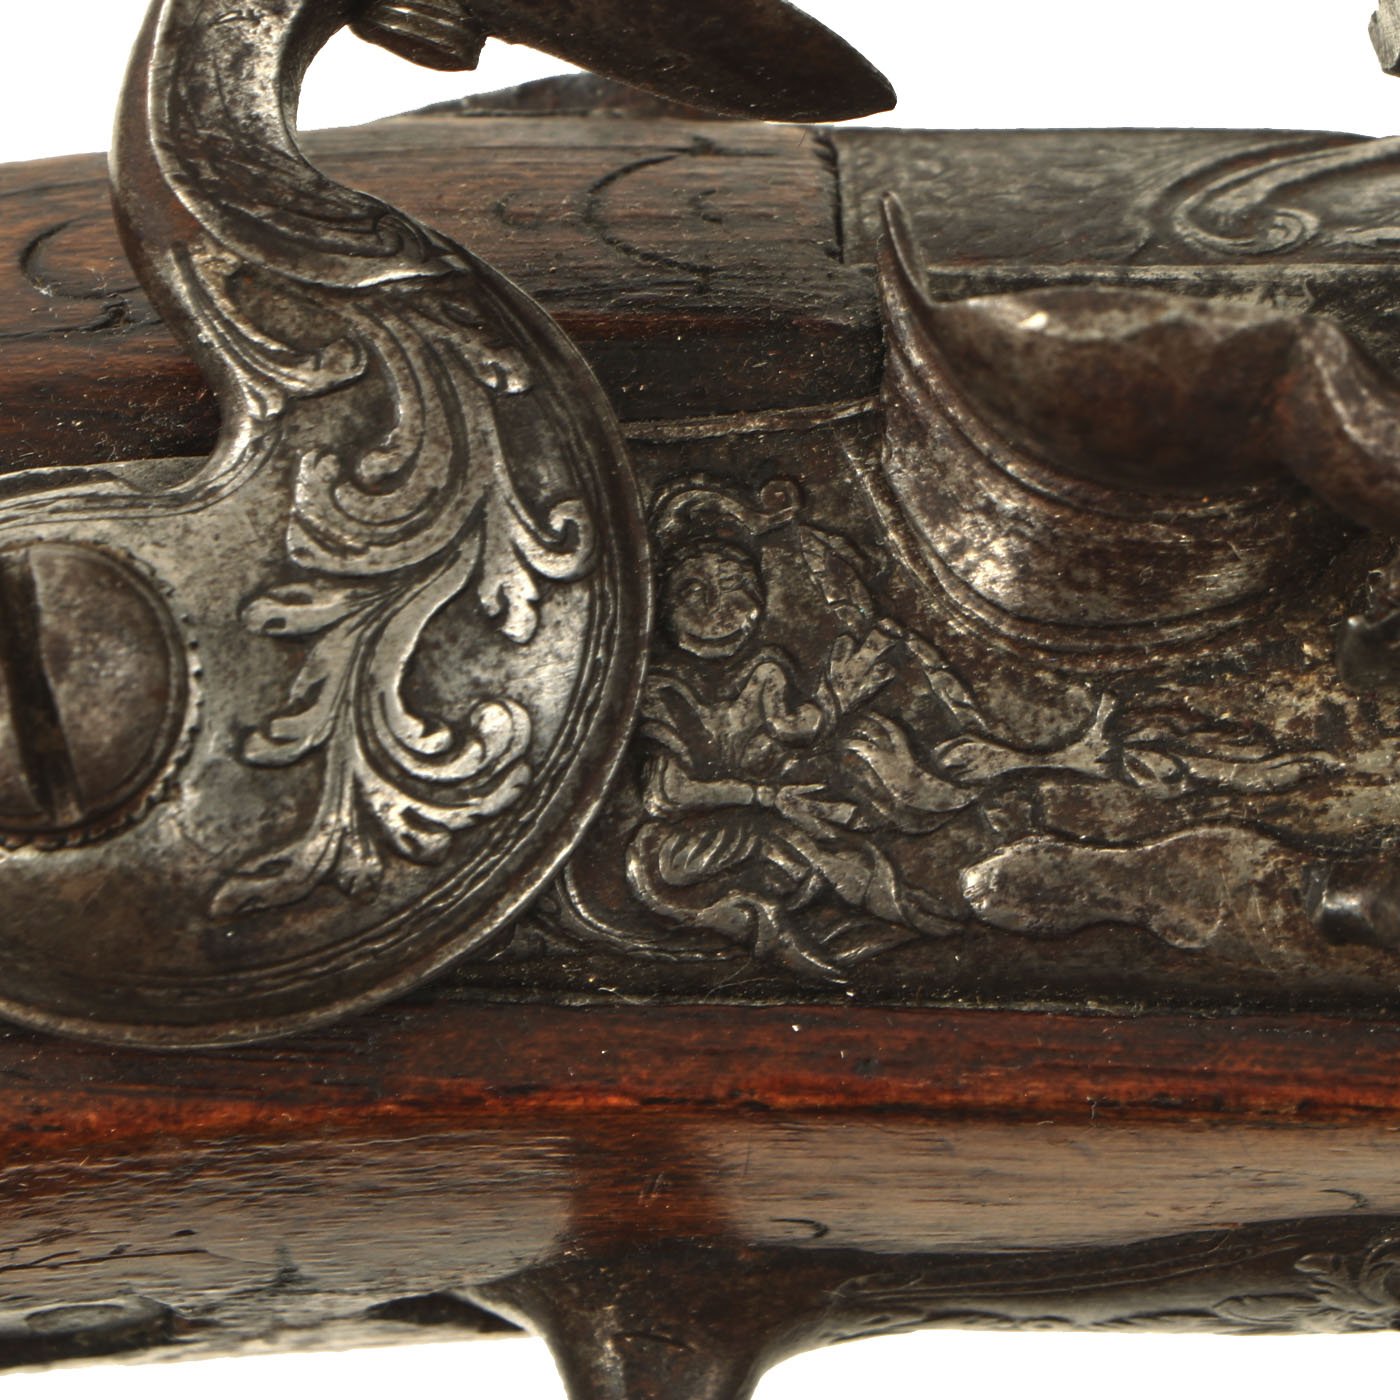 Flintlock Gun, Sri Lankan